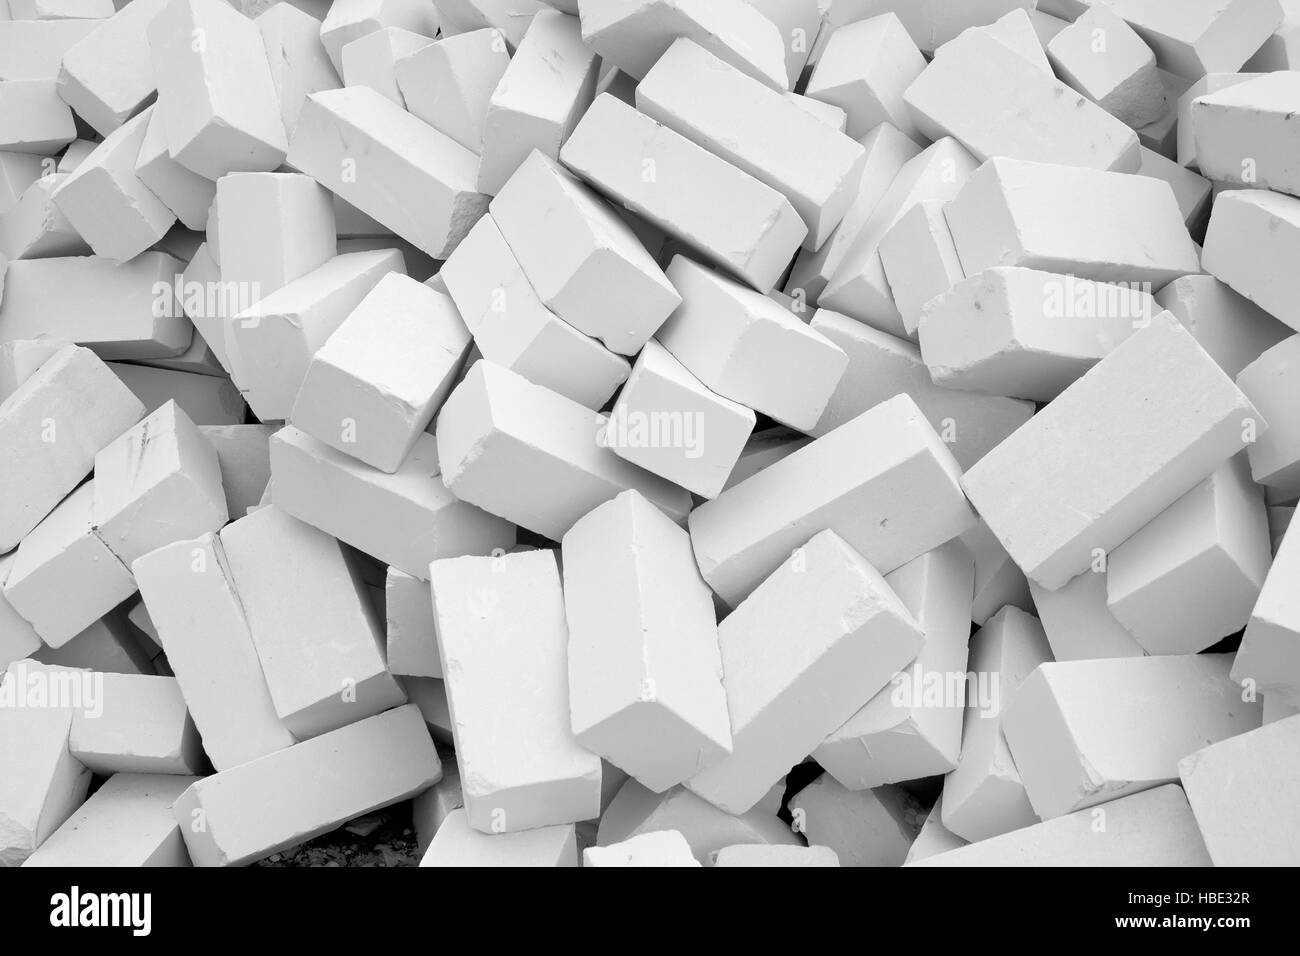 A large pile of white silicate bricks Stock Photo